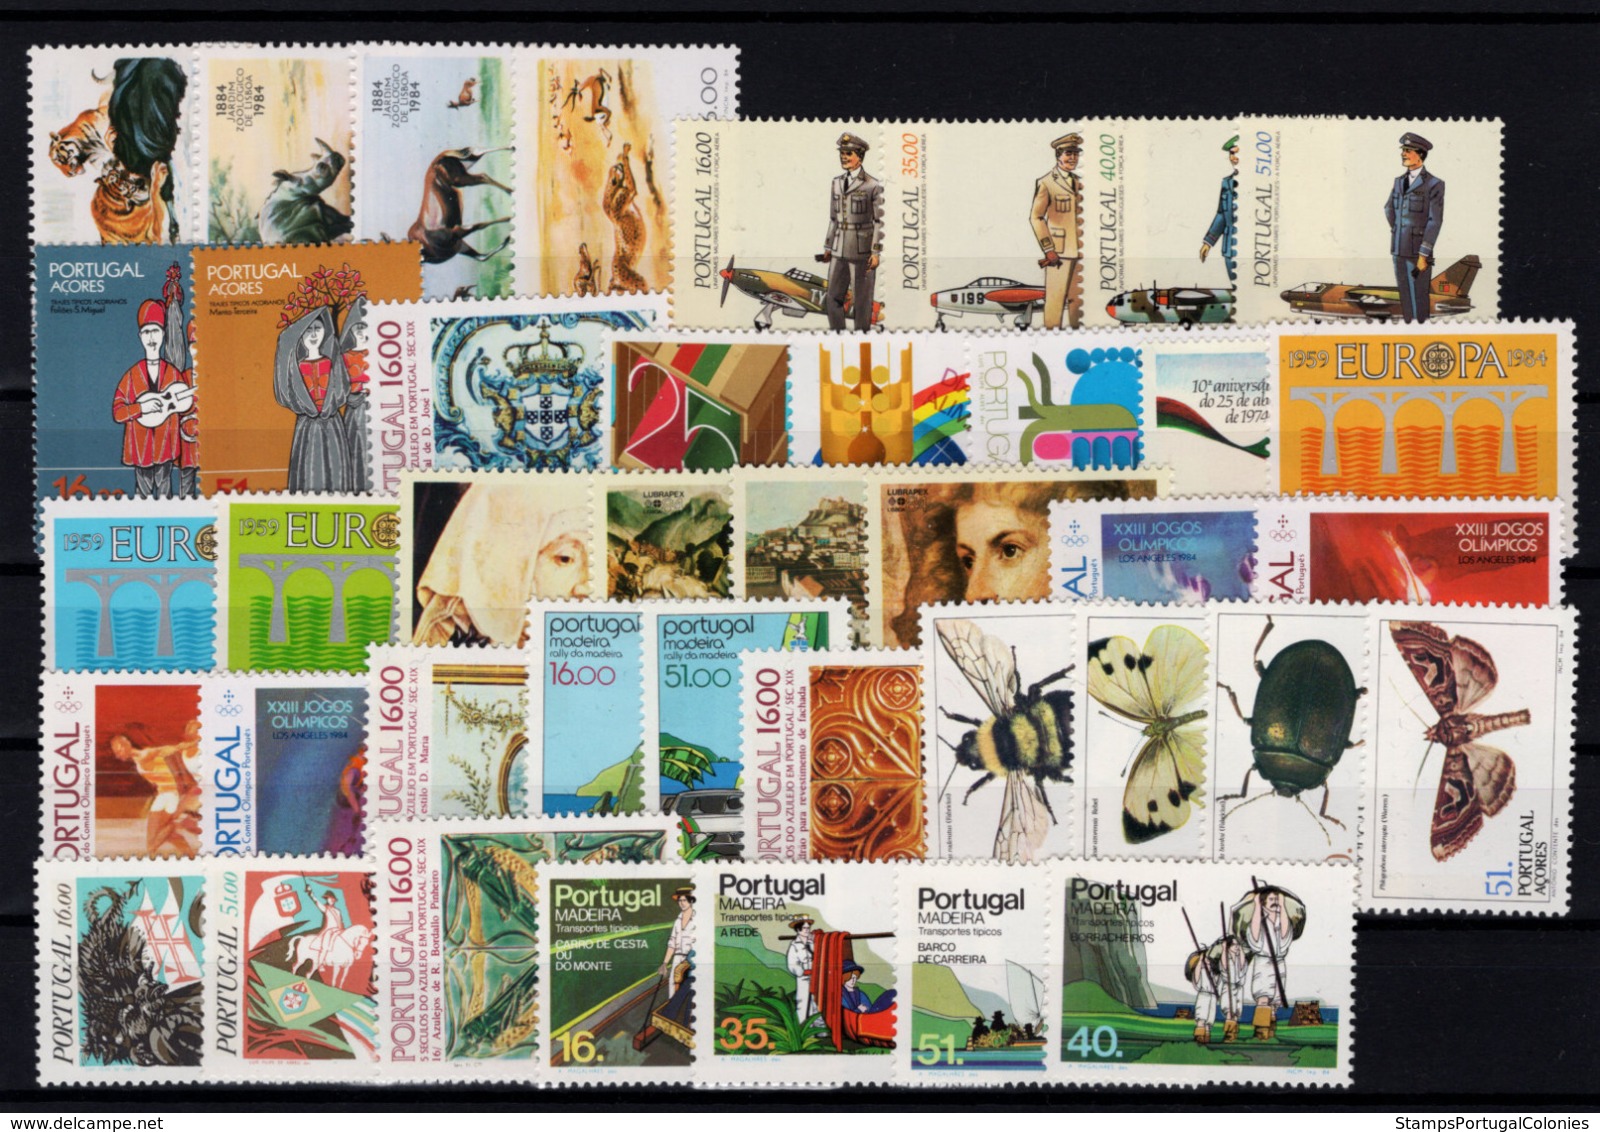 1984 Portugal Azores Madeira Complete Year MNH Stamps. Année Compléte NeufSansCharnière. Ano Completo Novo Sem Charneira - Années Complètes